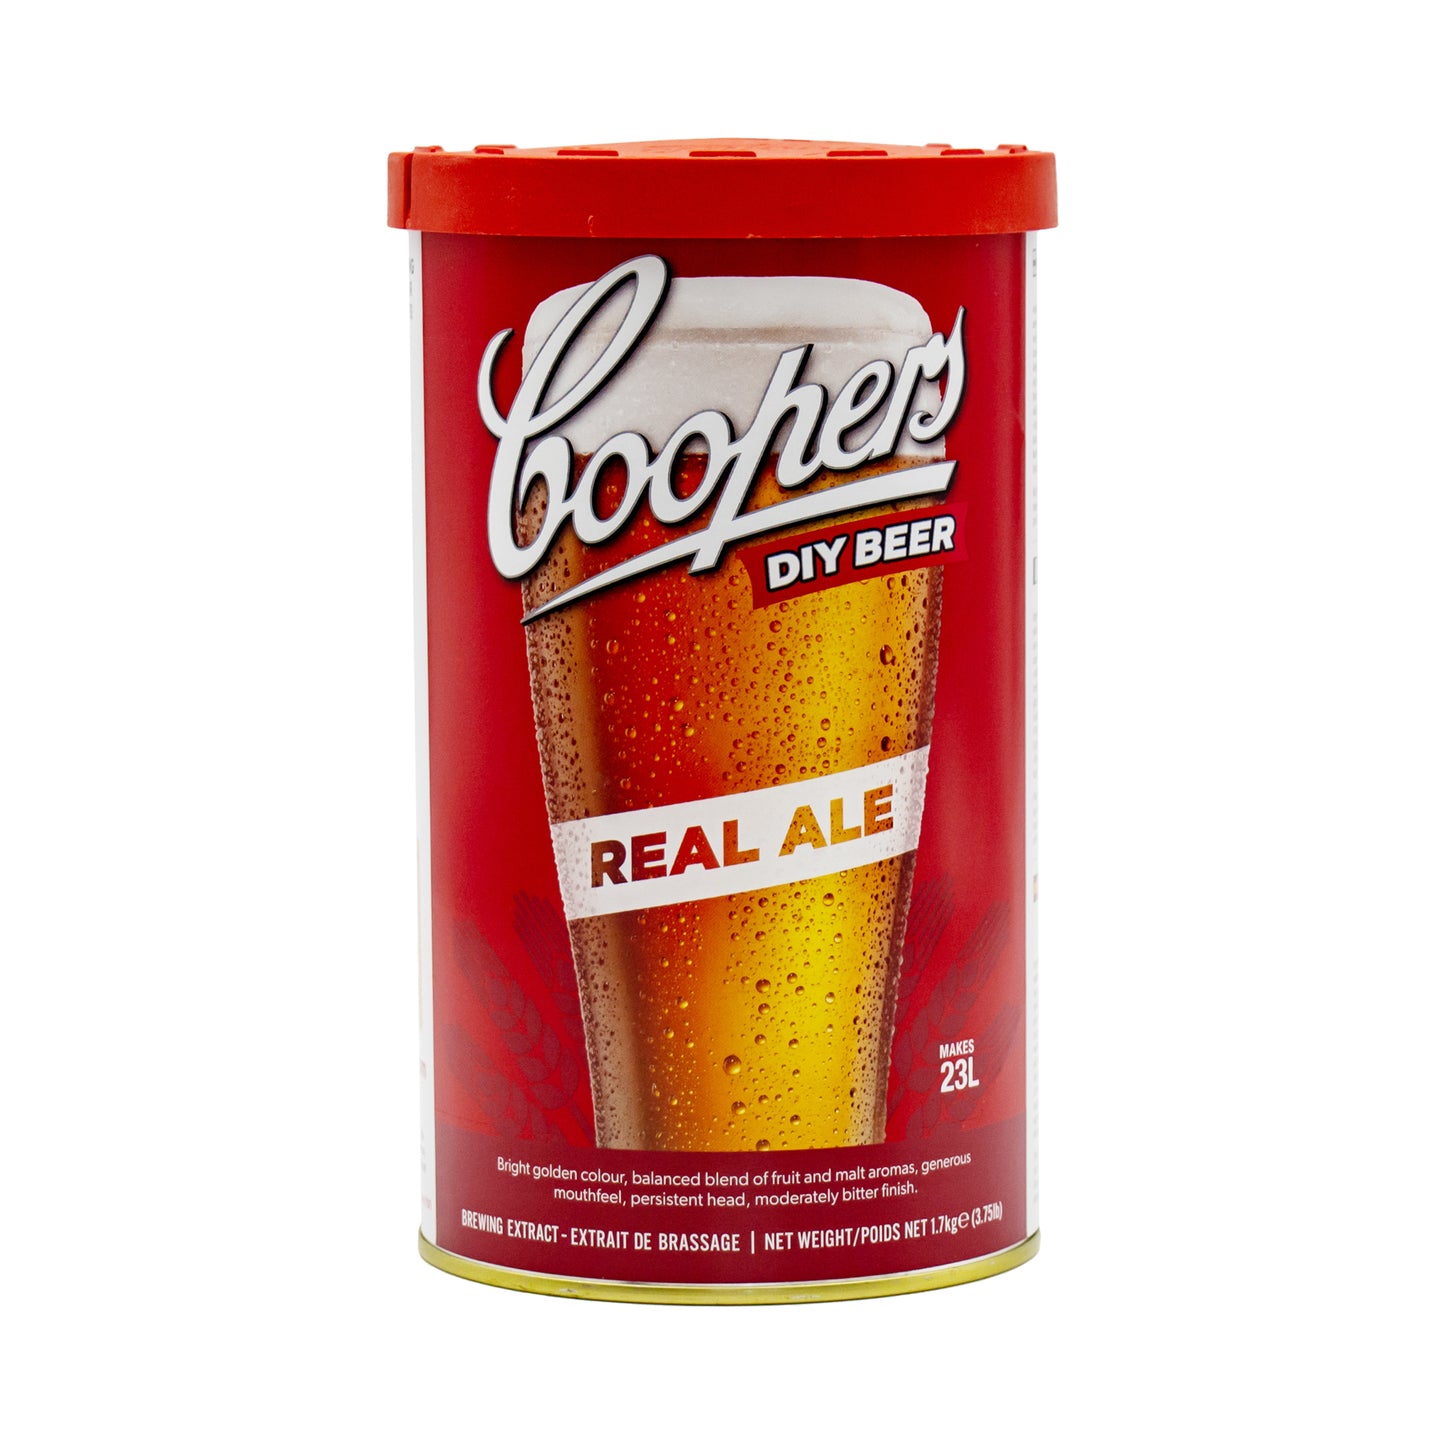 coopers original series real ale beer tin